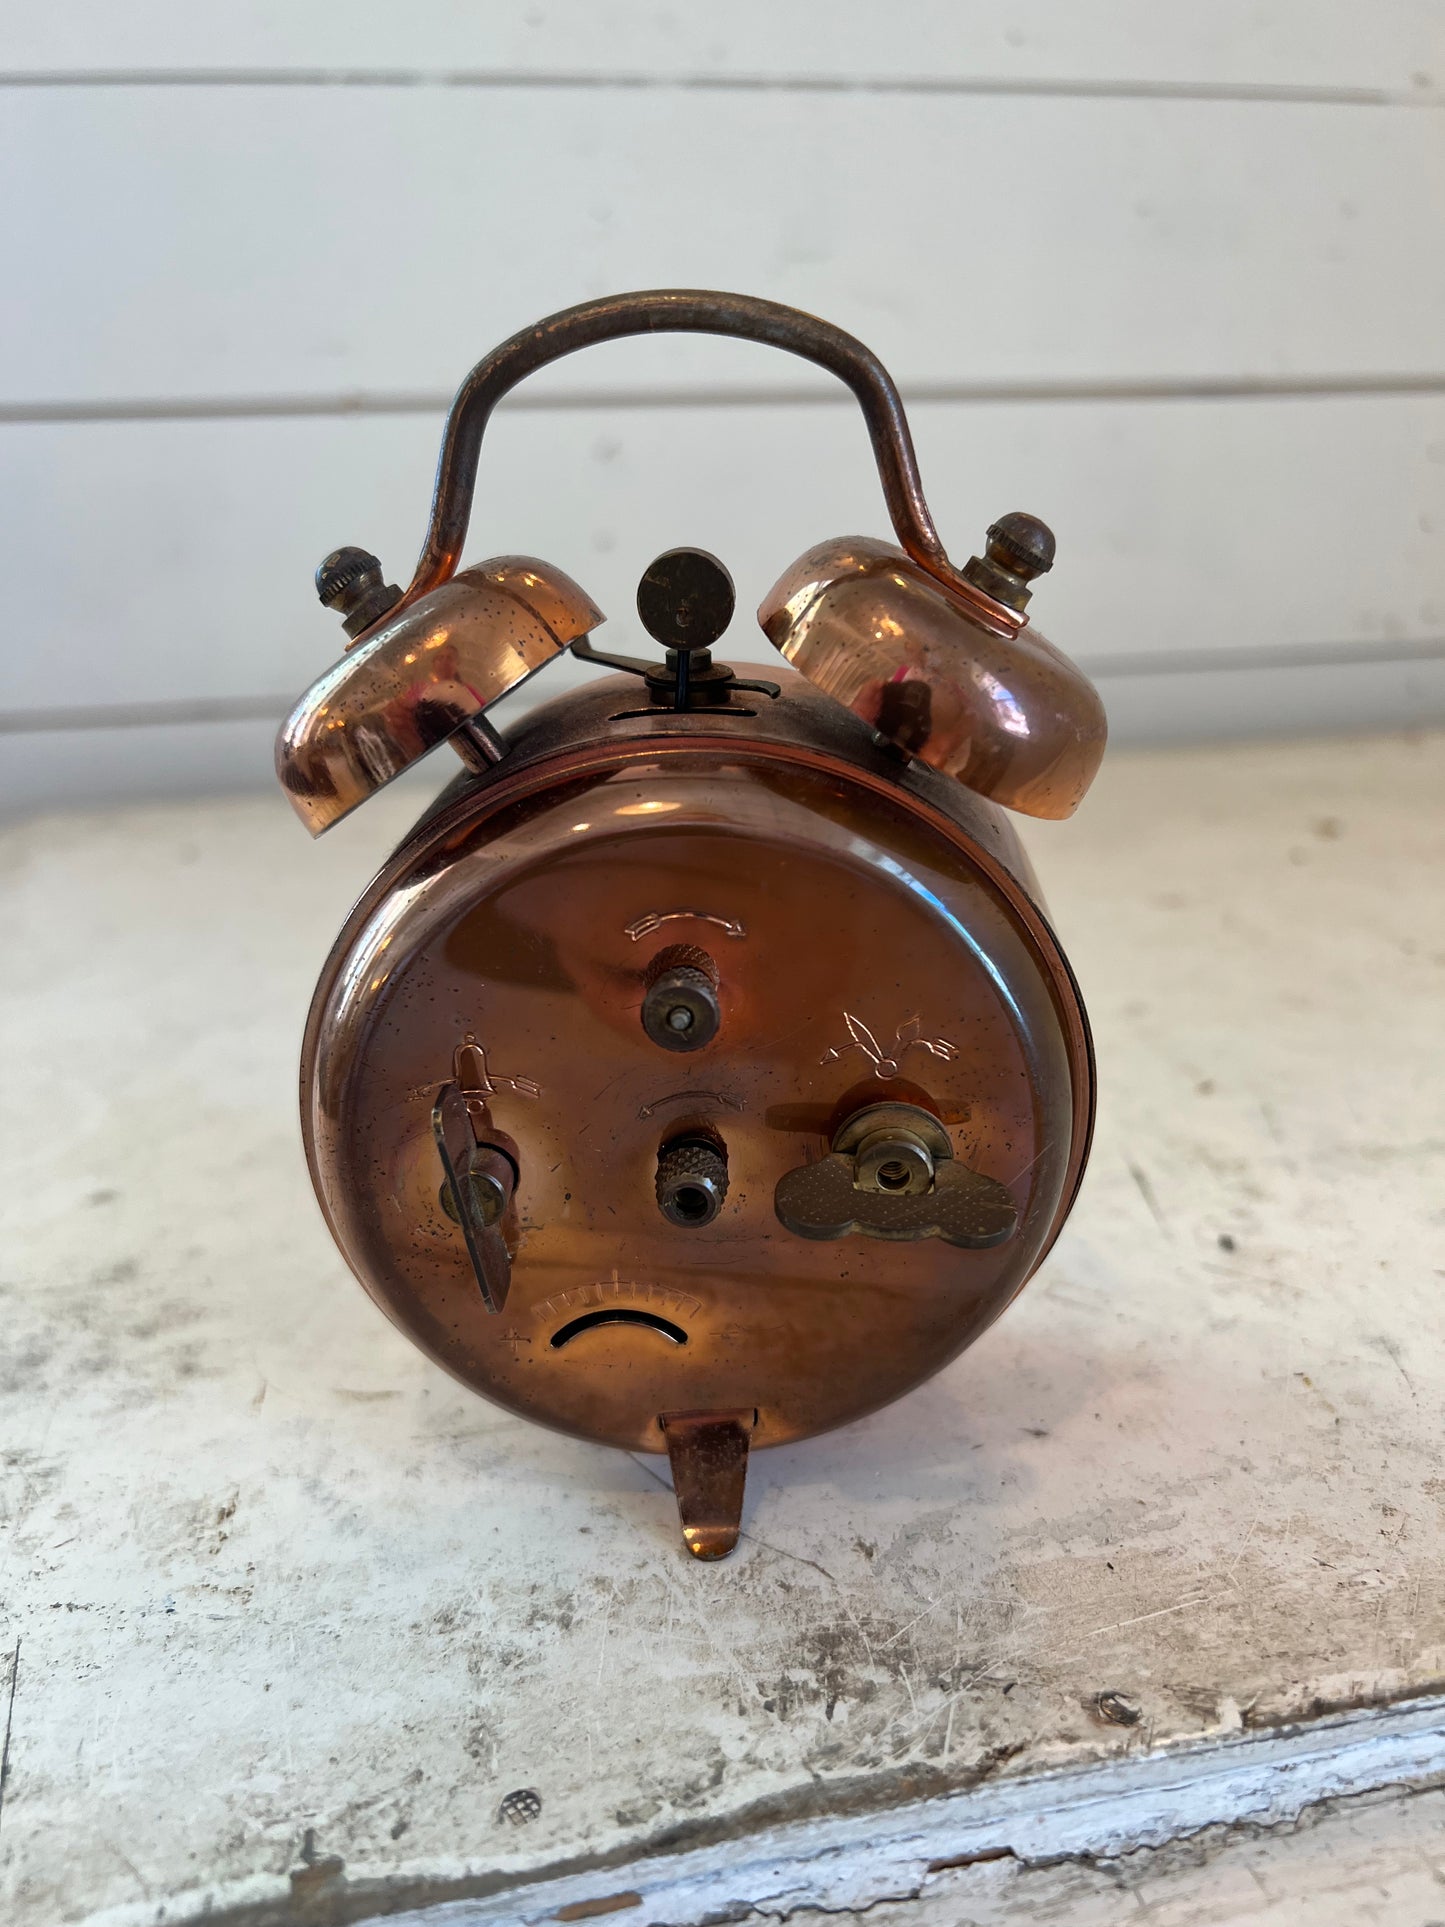 Vintage French Copper Alarm Clock